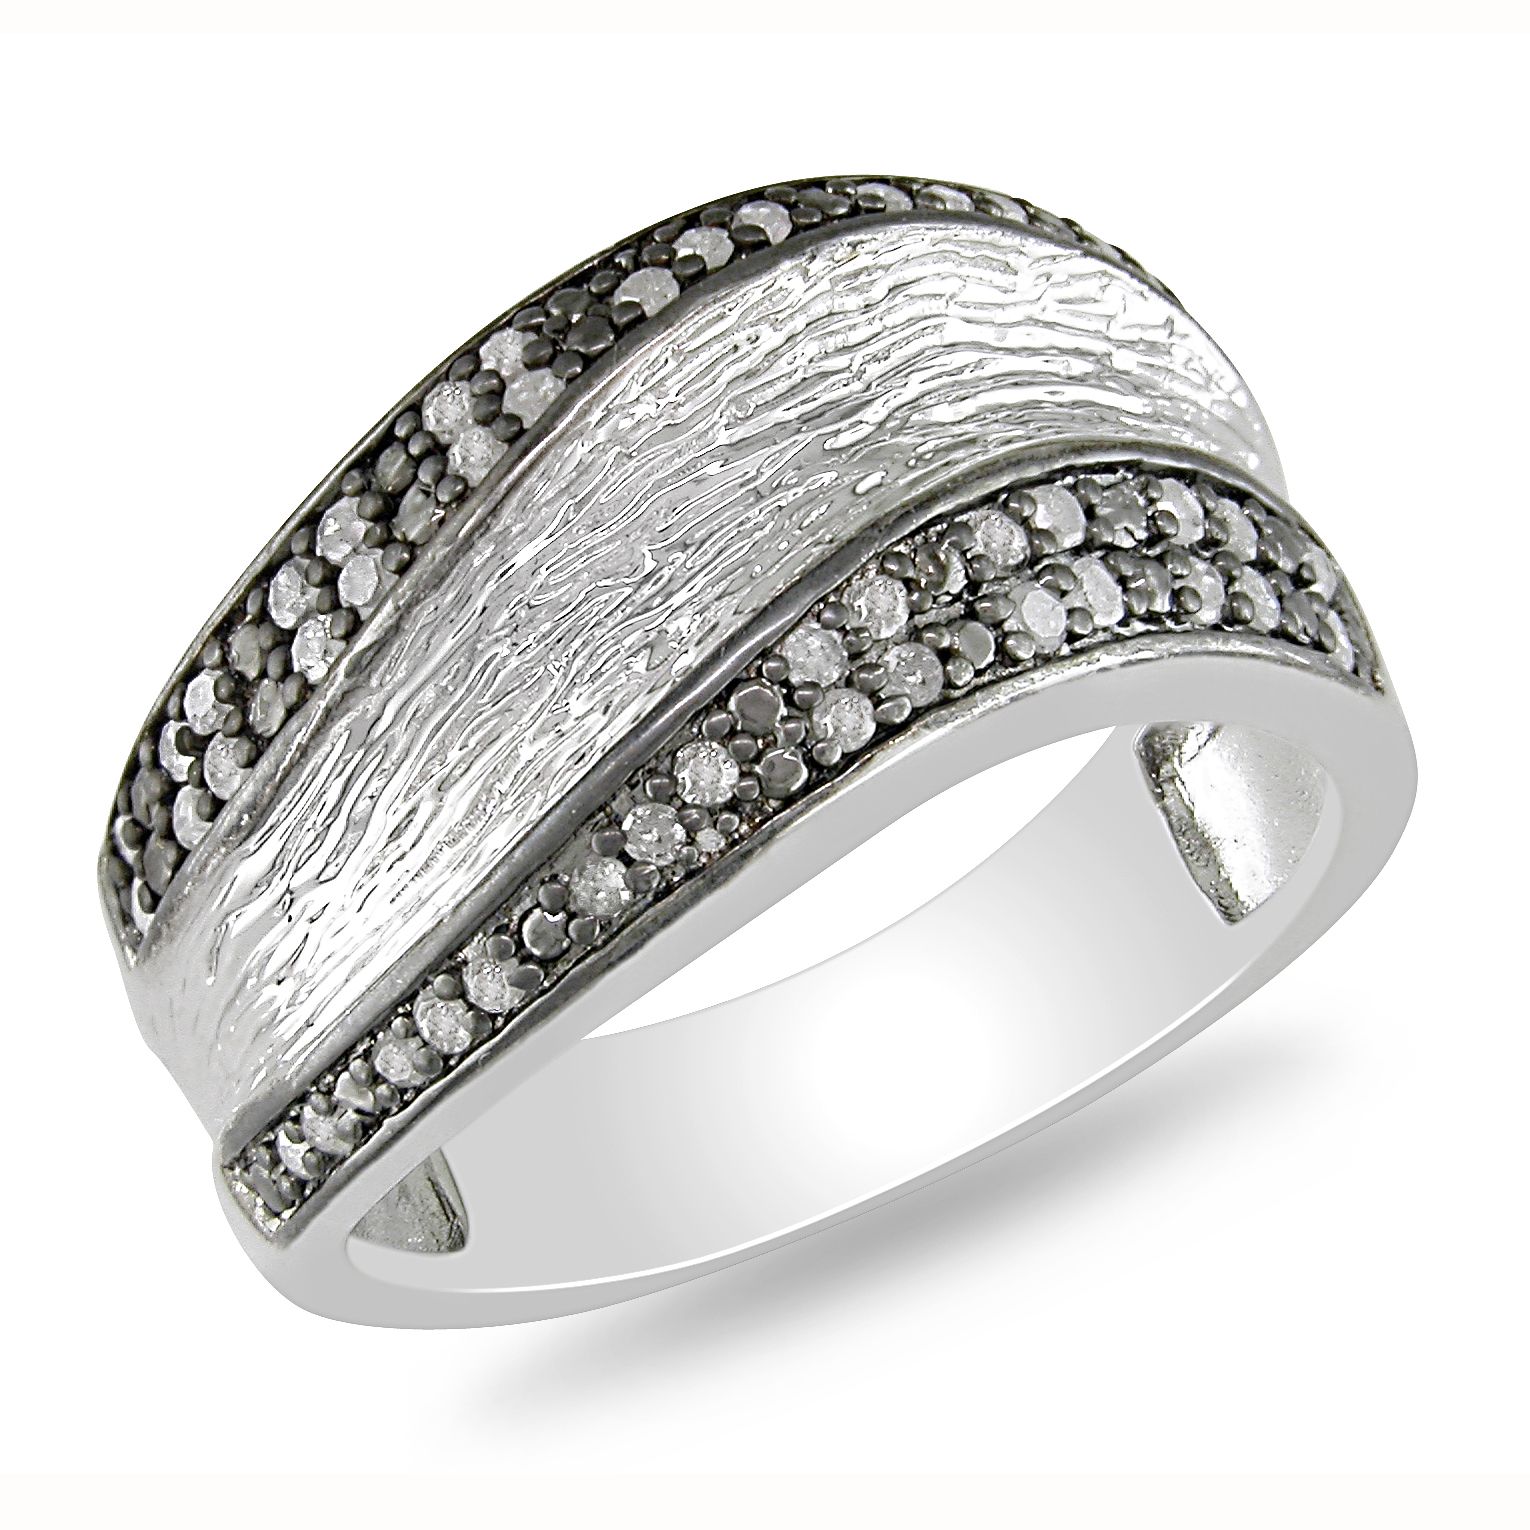 Sterling Silver with Black Rhodium Plating 1/4 CT Diamond Fashion Ring (GH I3)